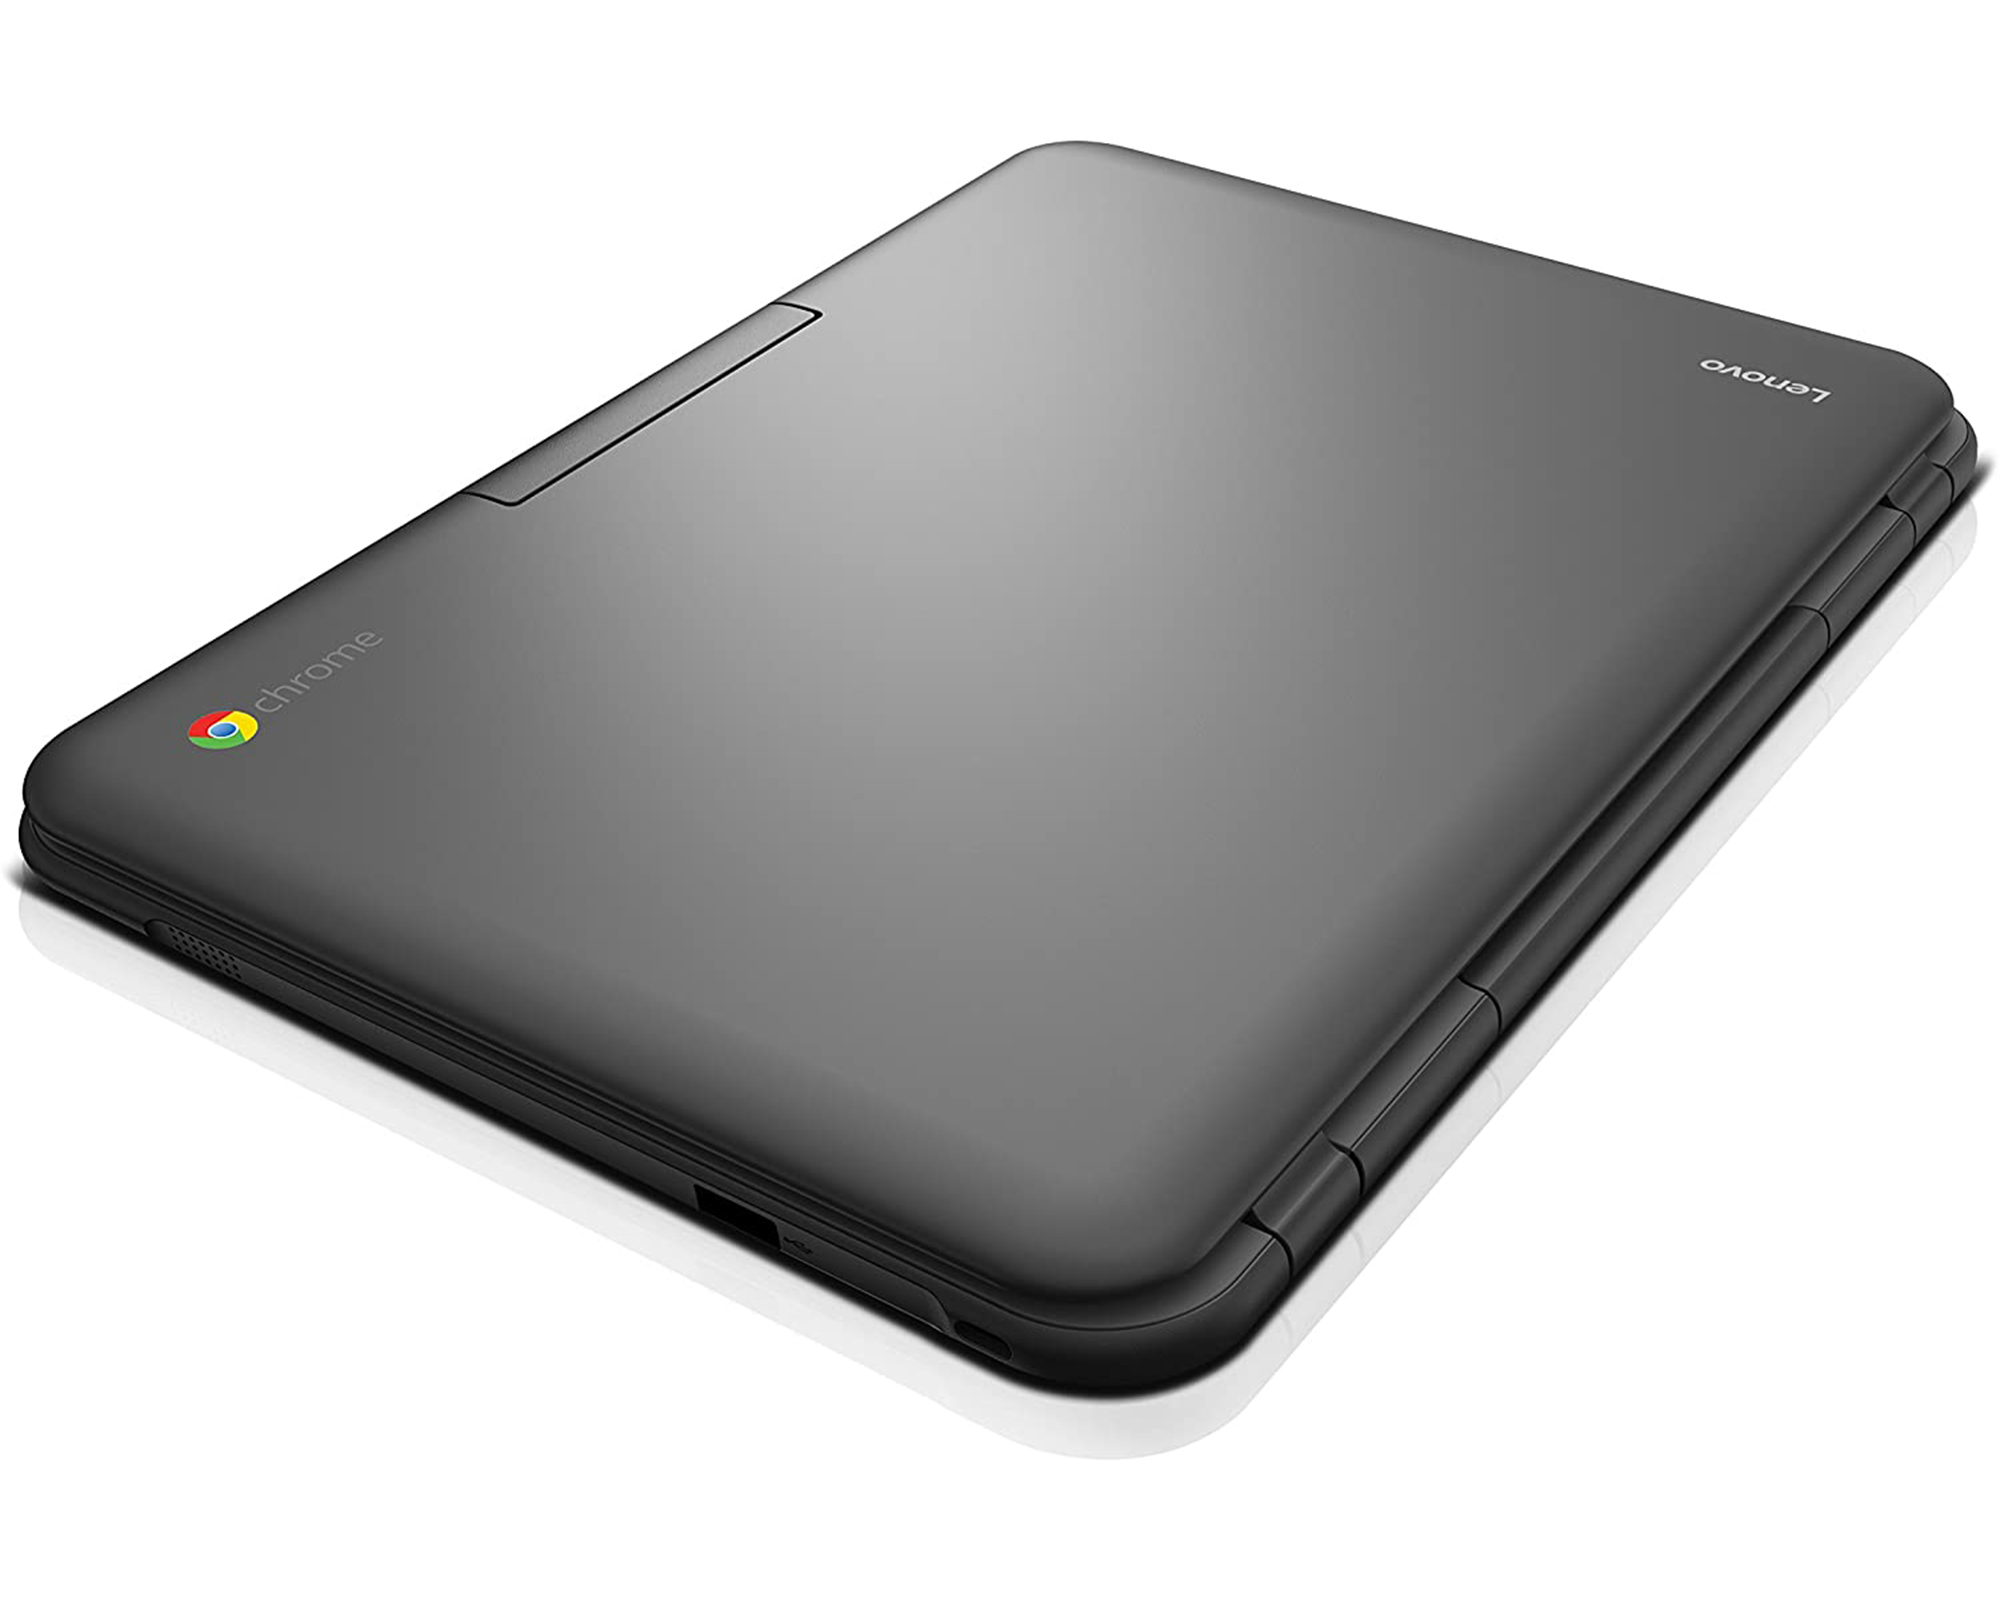 Used Lenovo N22 Series Chromebook 11.6-Inch (2GB RAM, 16GB HDD, Intel Celeron 1.60GHz) - image 5 of 10